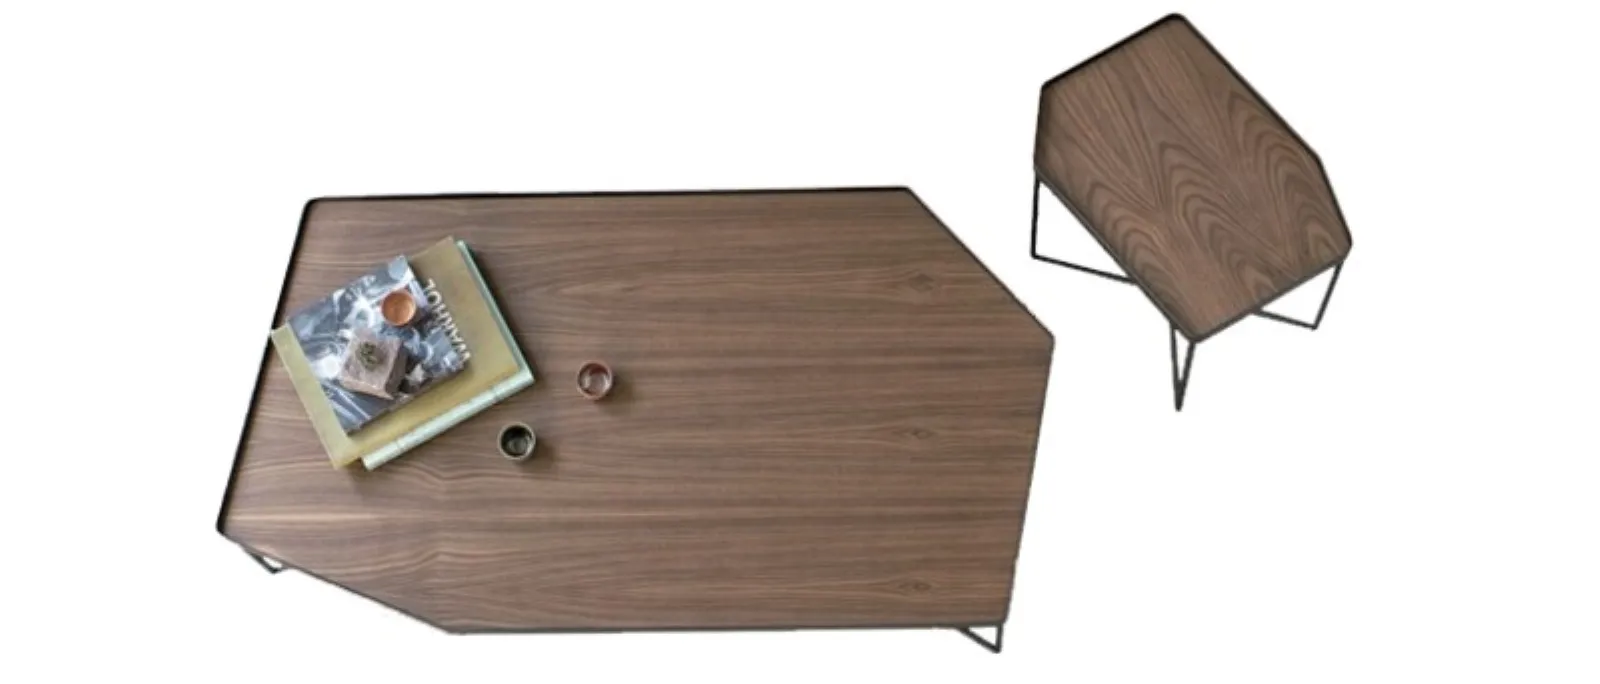 Kirk shaped coffee table